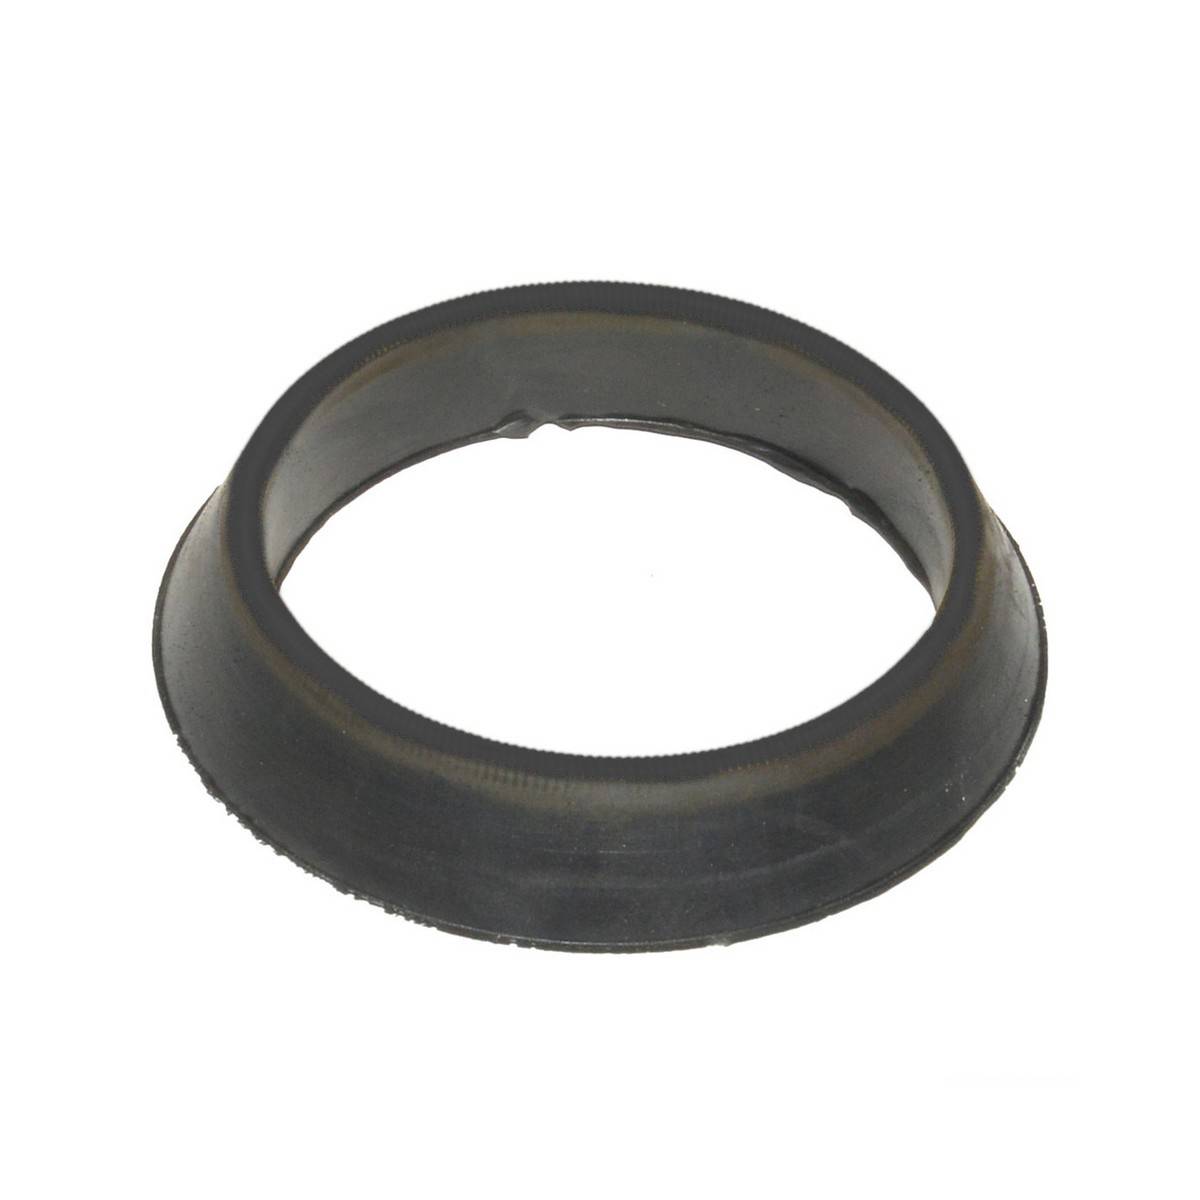 All Products - RTJ gasket,ring joint gasket,API gasket,octagonal gasket,oval  gasket,bonnet seal ring